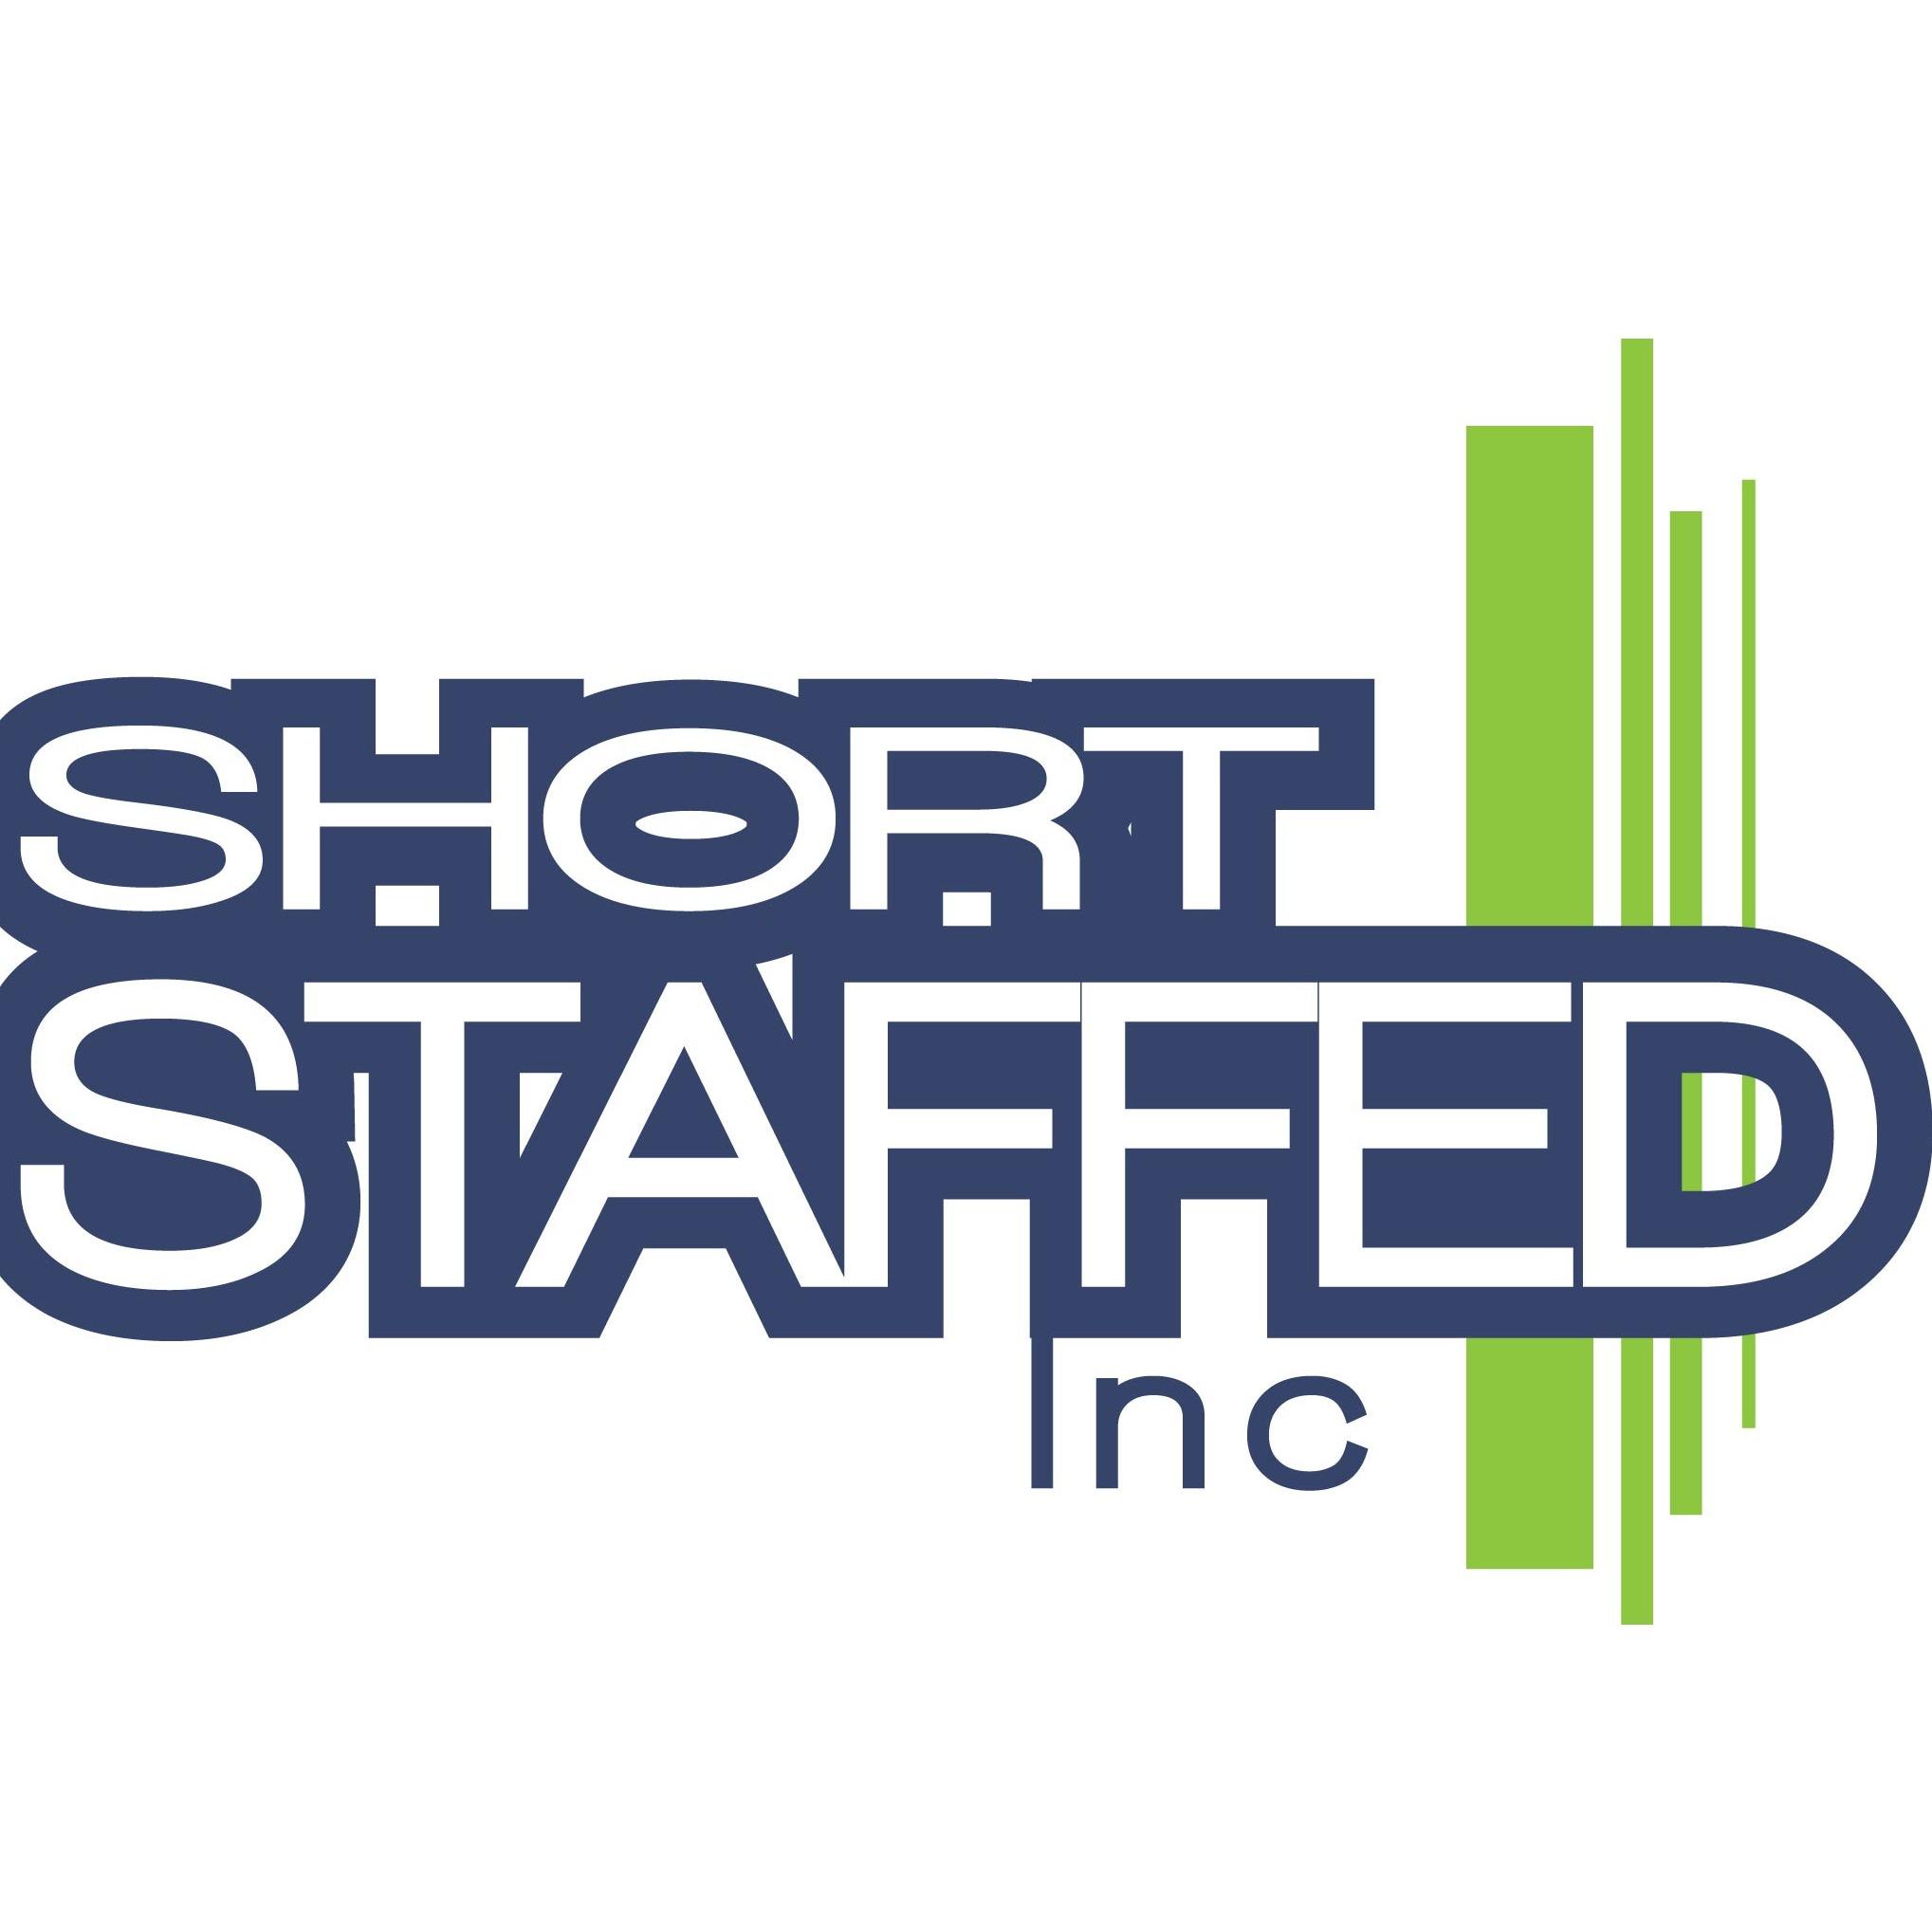 Short Staffed Logo